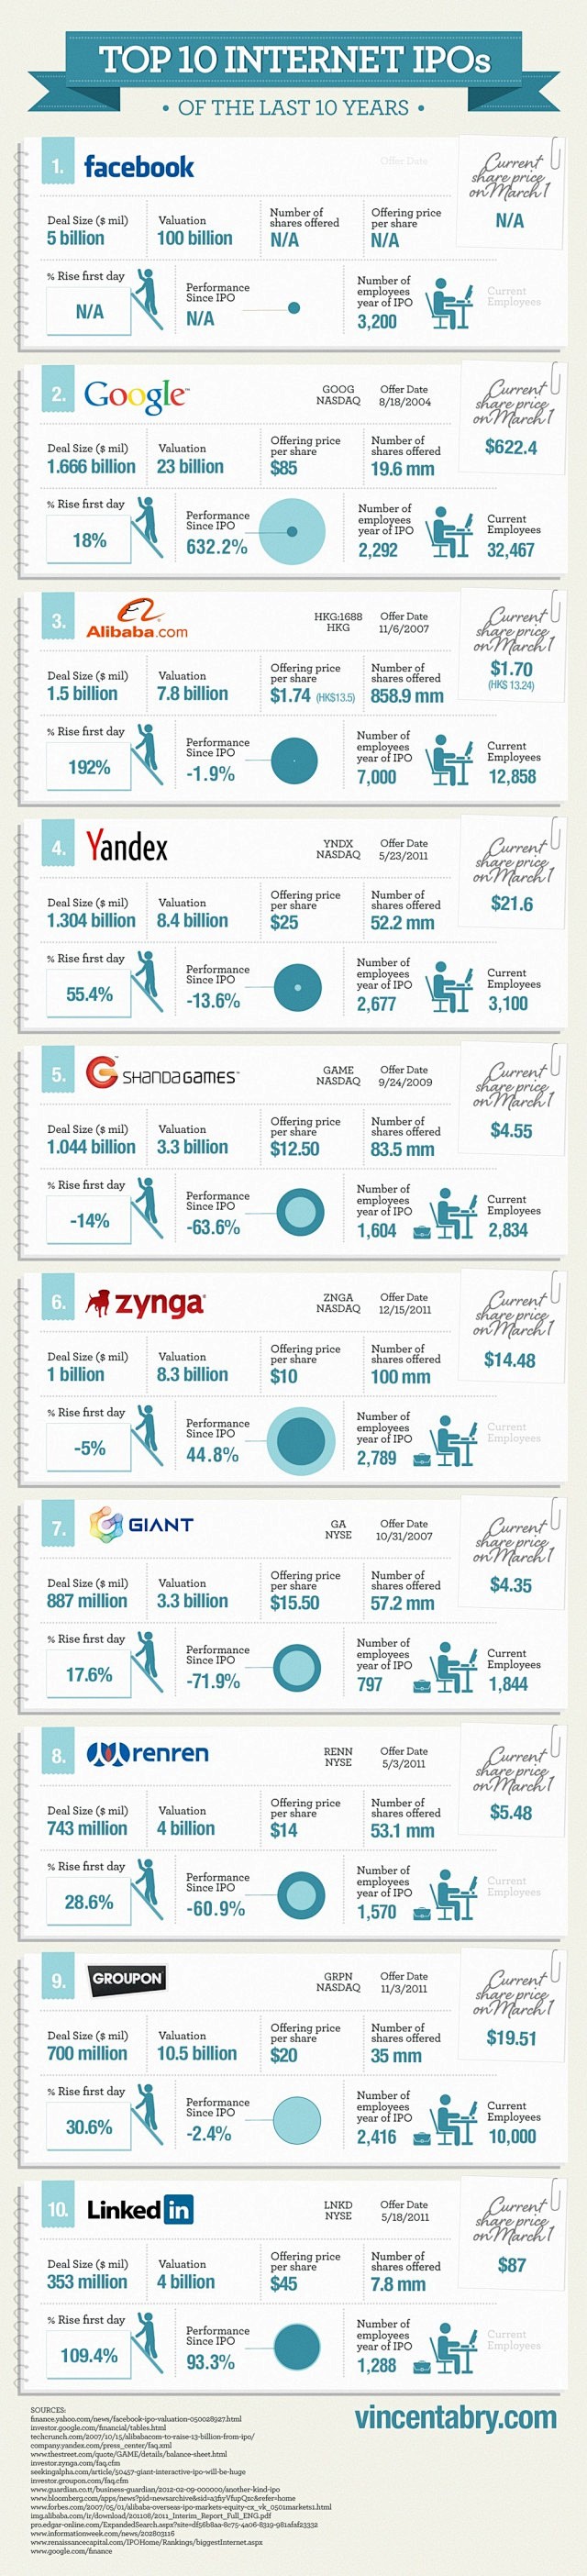 Top 10 Internet IPOs...